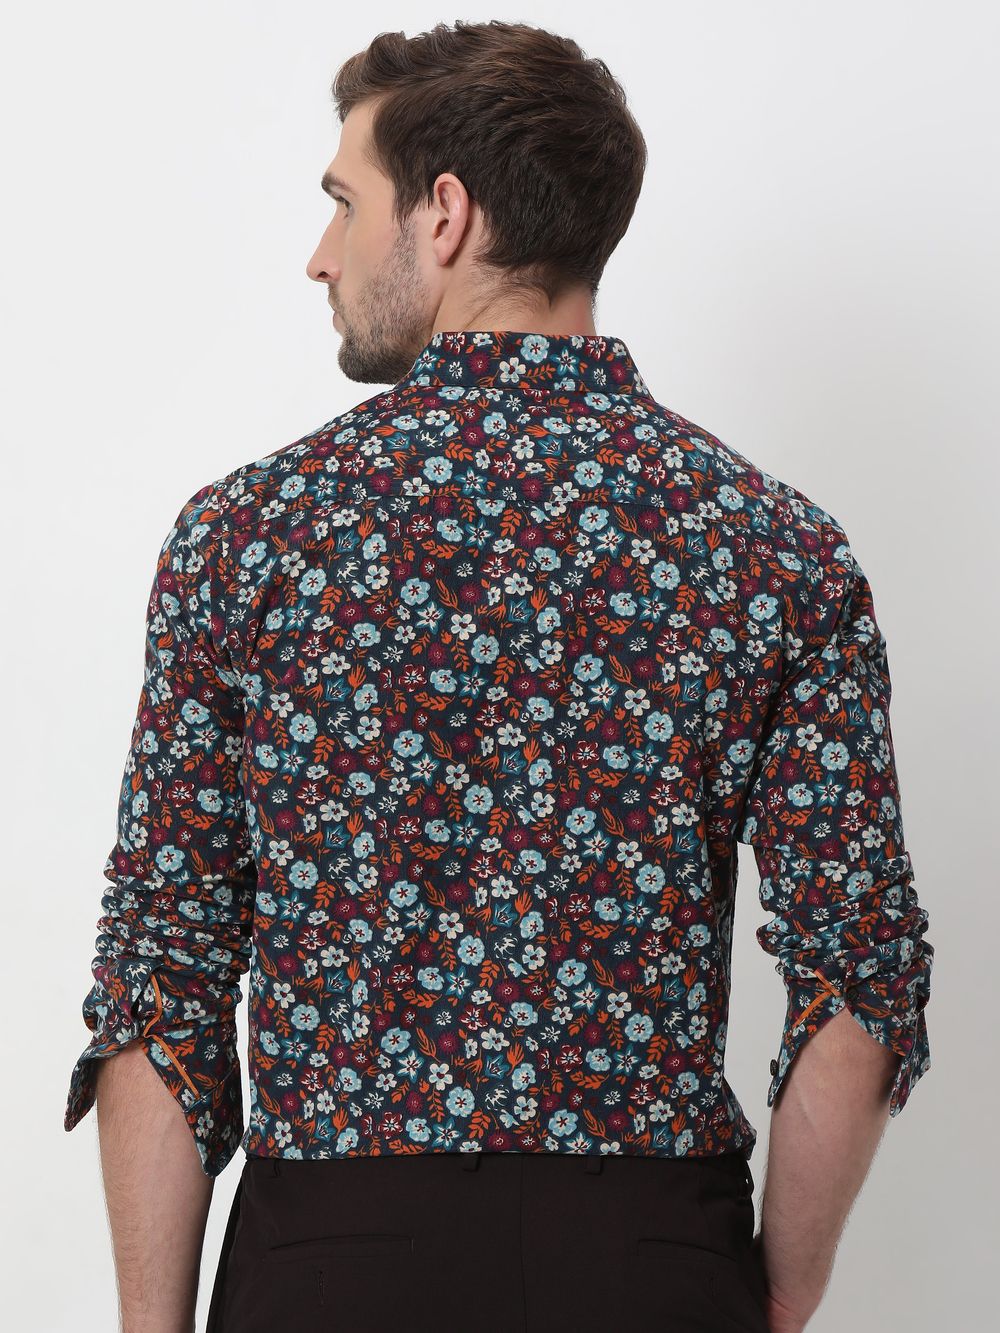 Teal & Multi Floral Print Corduroy Shirt